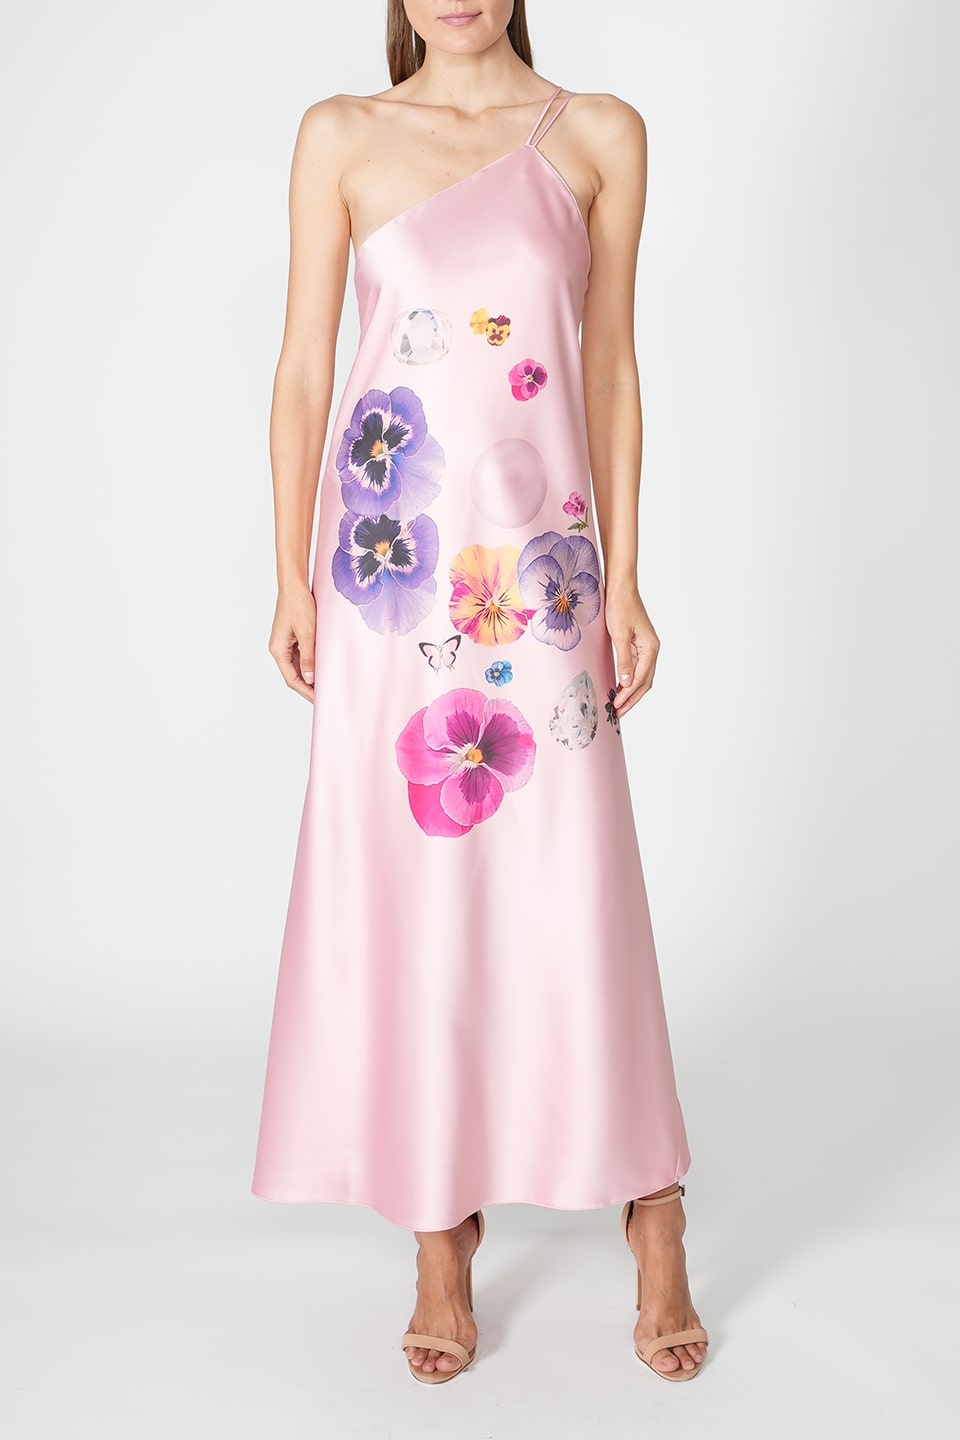 Shop online trendy Pink Midi dresses from Vivetta Fashion designer. Product gallery 1